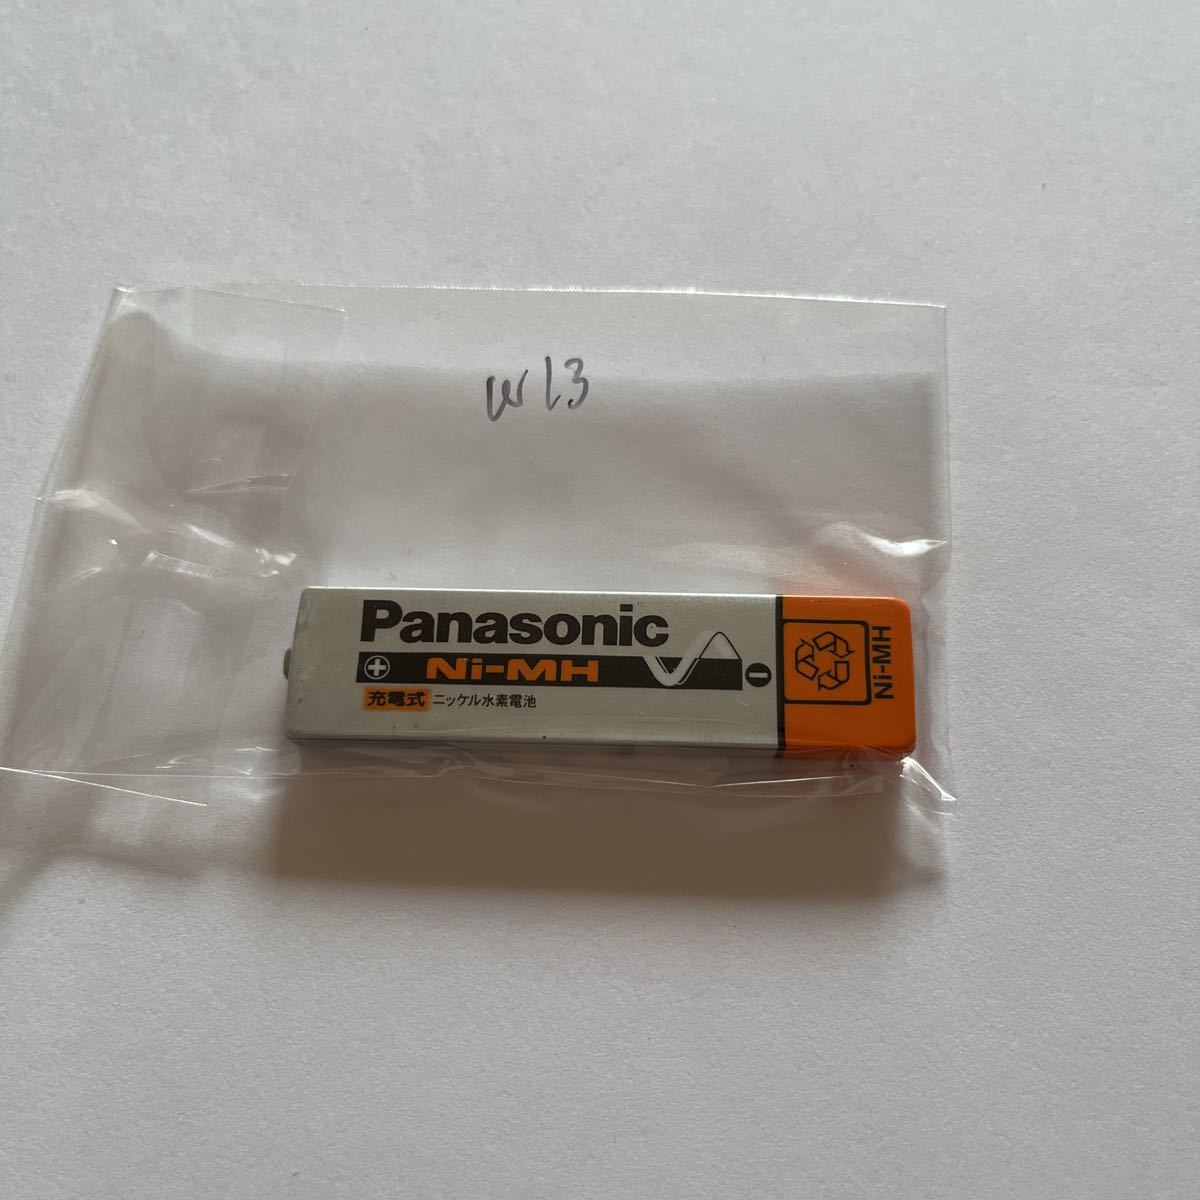  operation not yet verification Panasonic Panasonic chewing gum battery rechargeable battery HHF-AZ01 1400mAh CD player? MD player? Walkman exclusive use Junk 